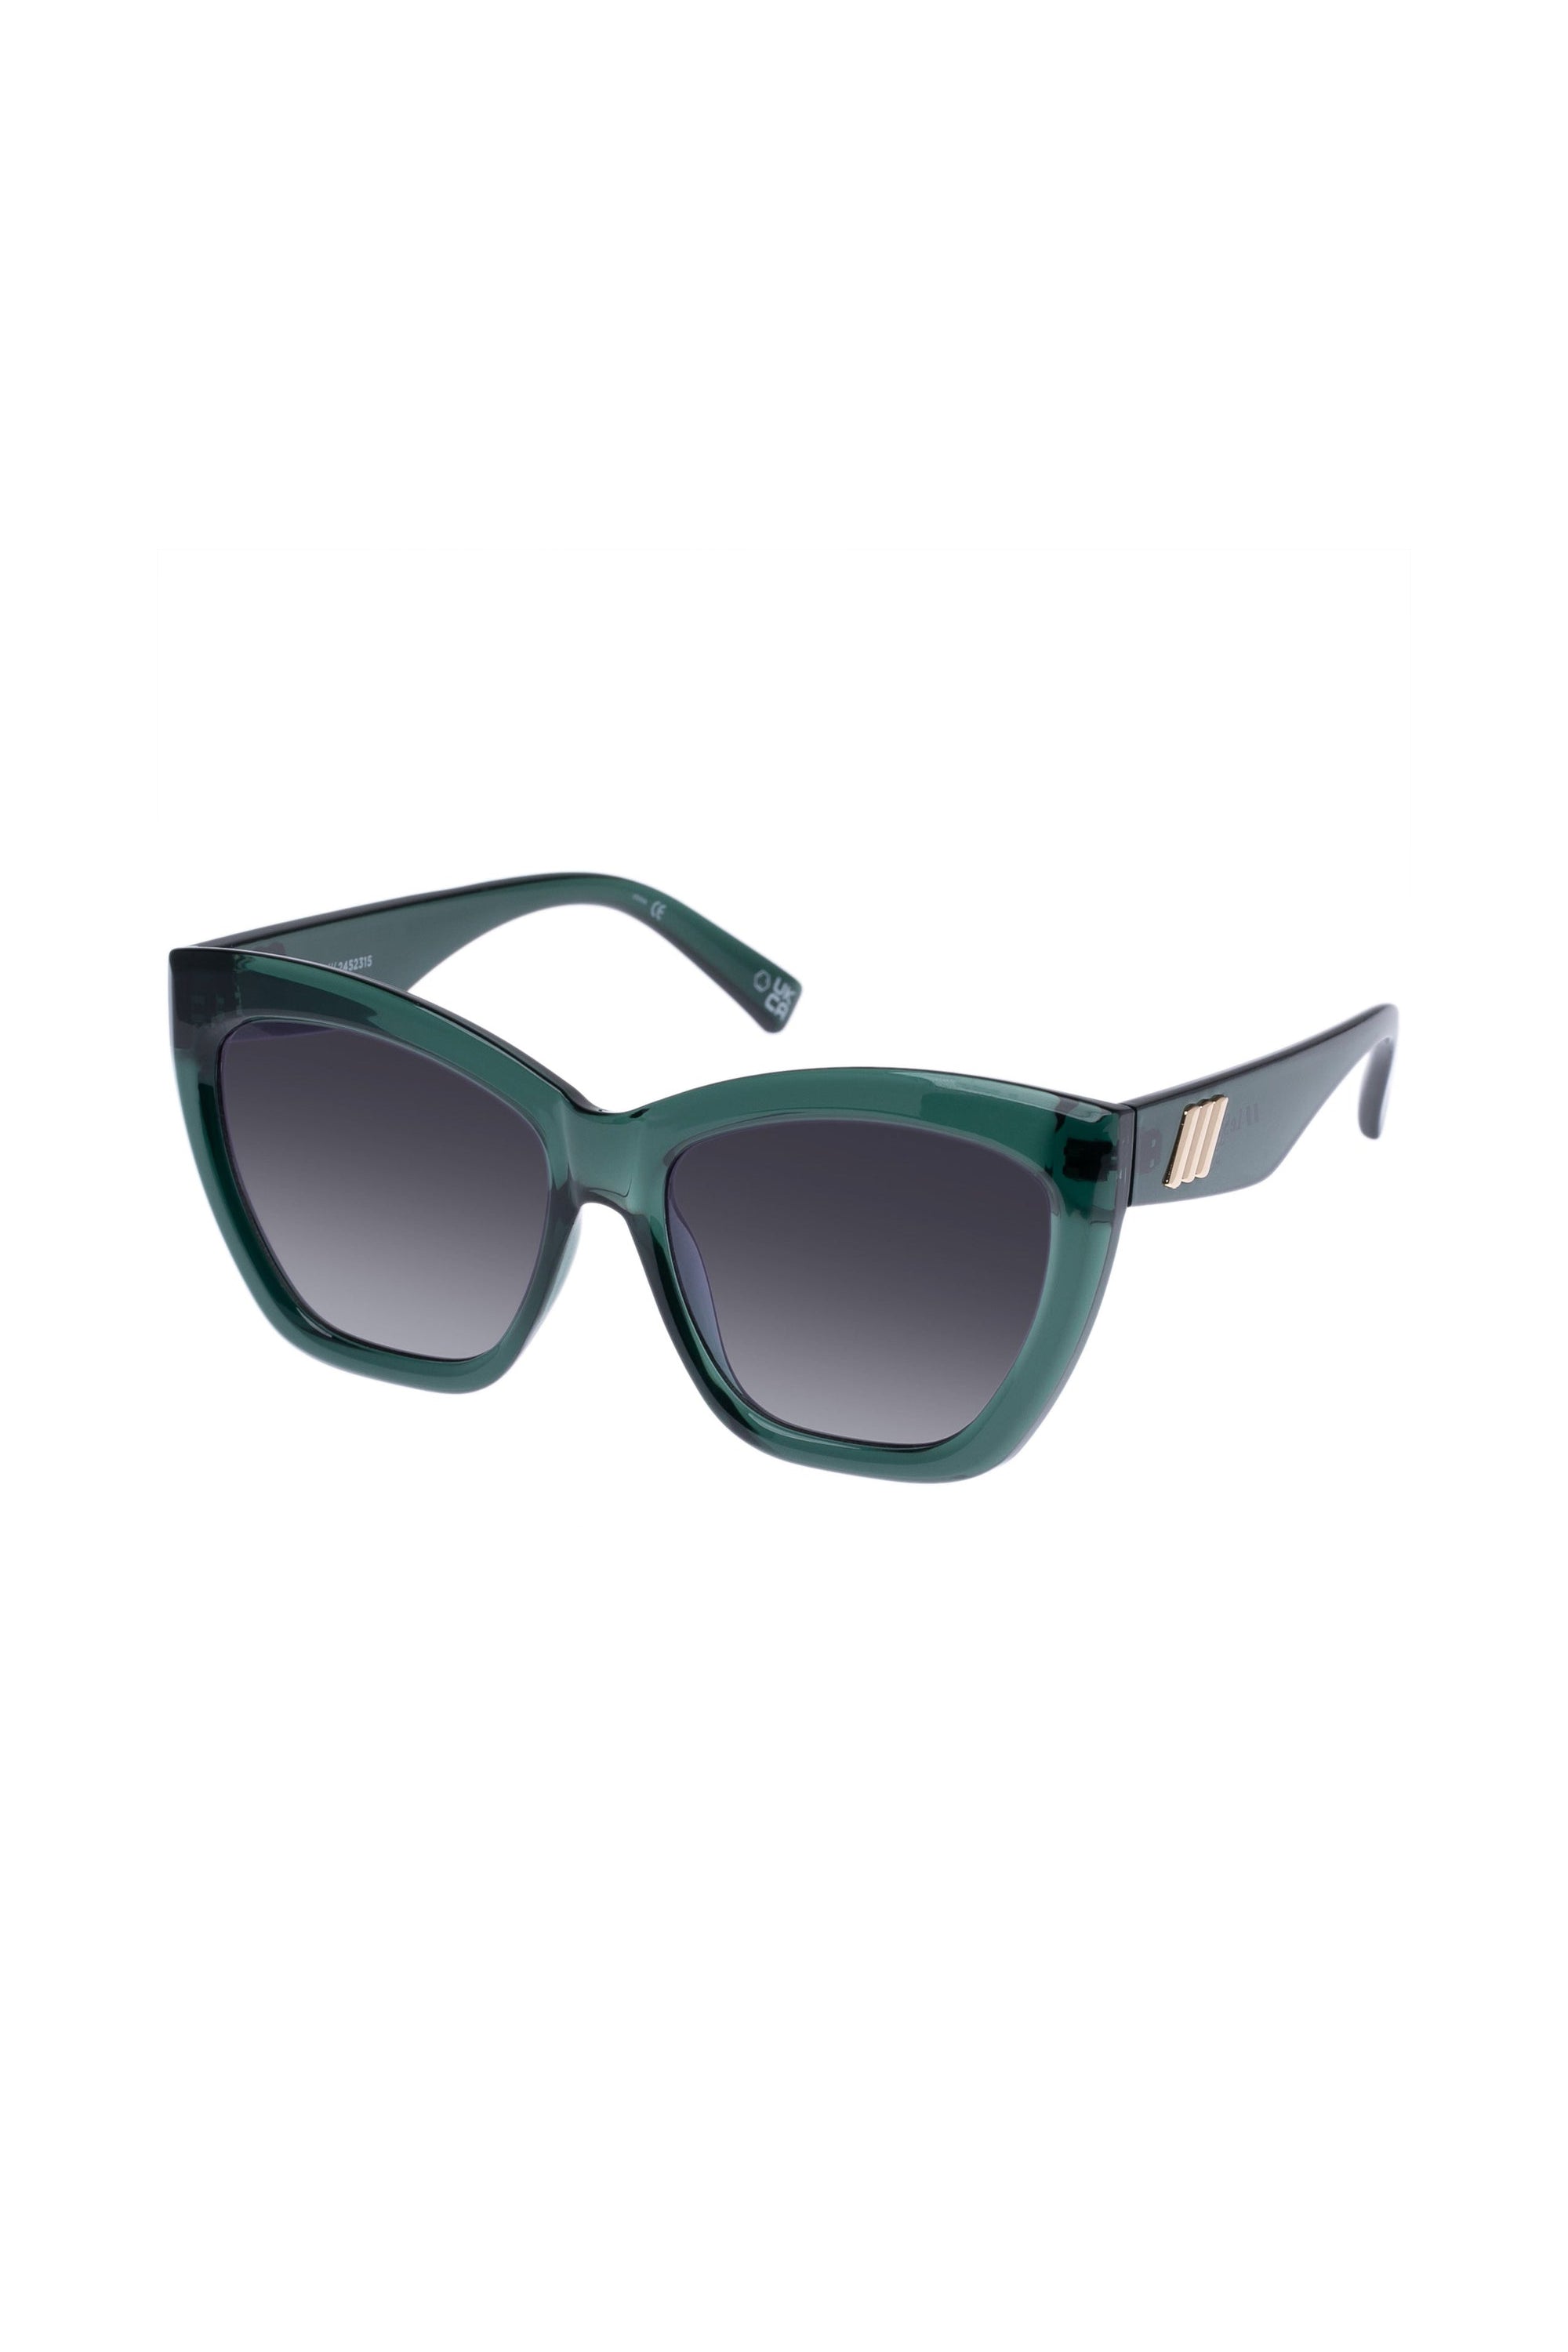 Le Specs Vamos Sunglasses - Emerald Green - RUM Amsterdam